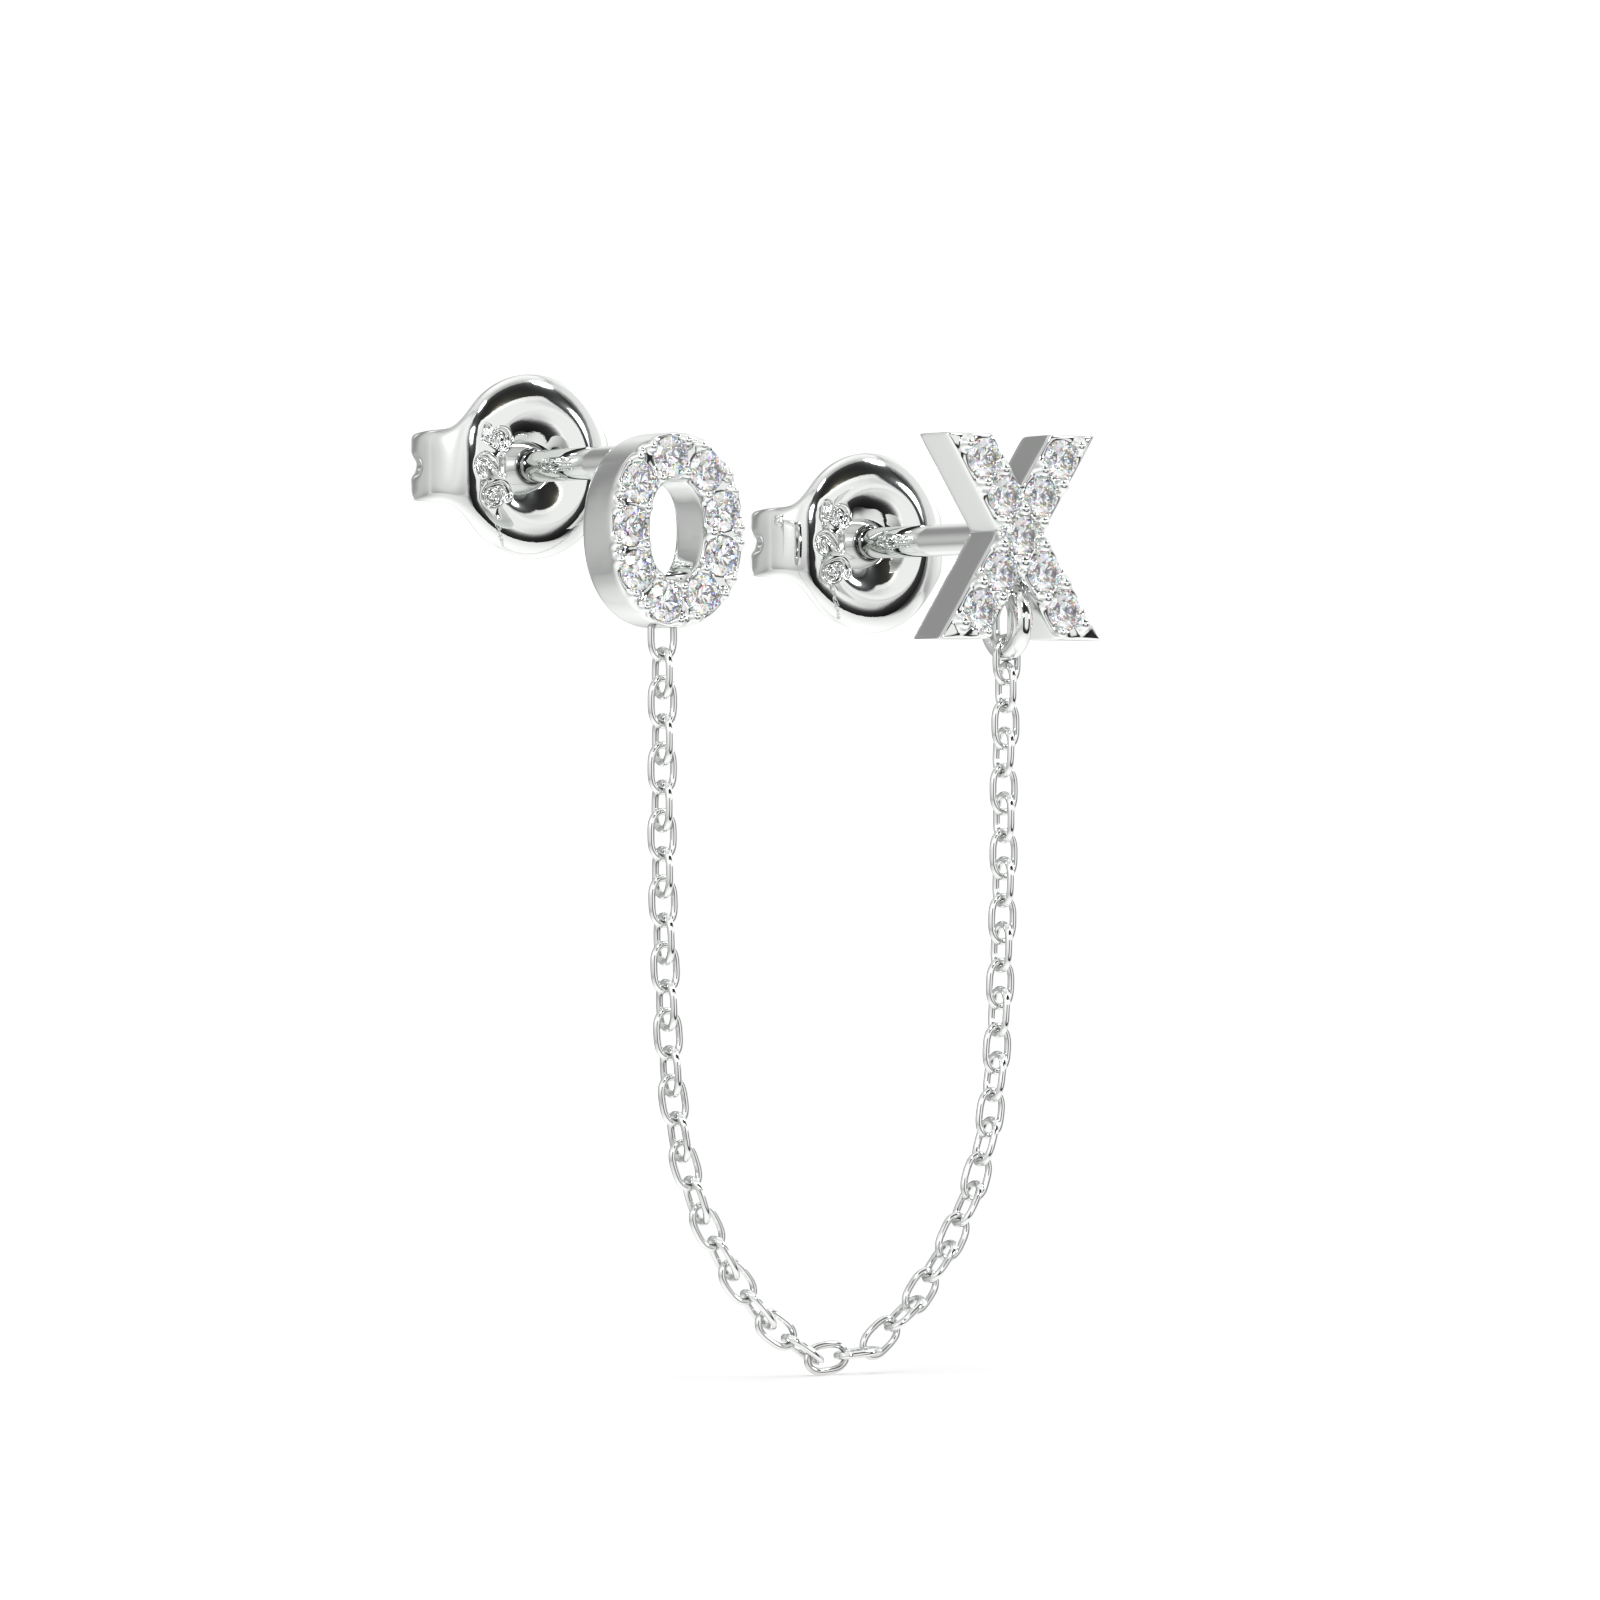 XO - 3 in 1 chain connector earring